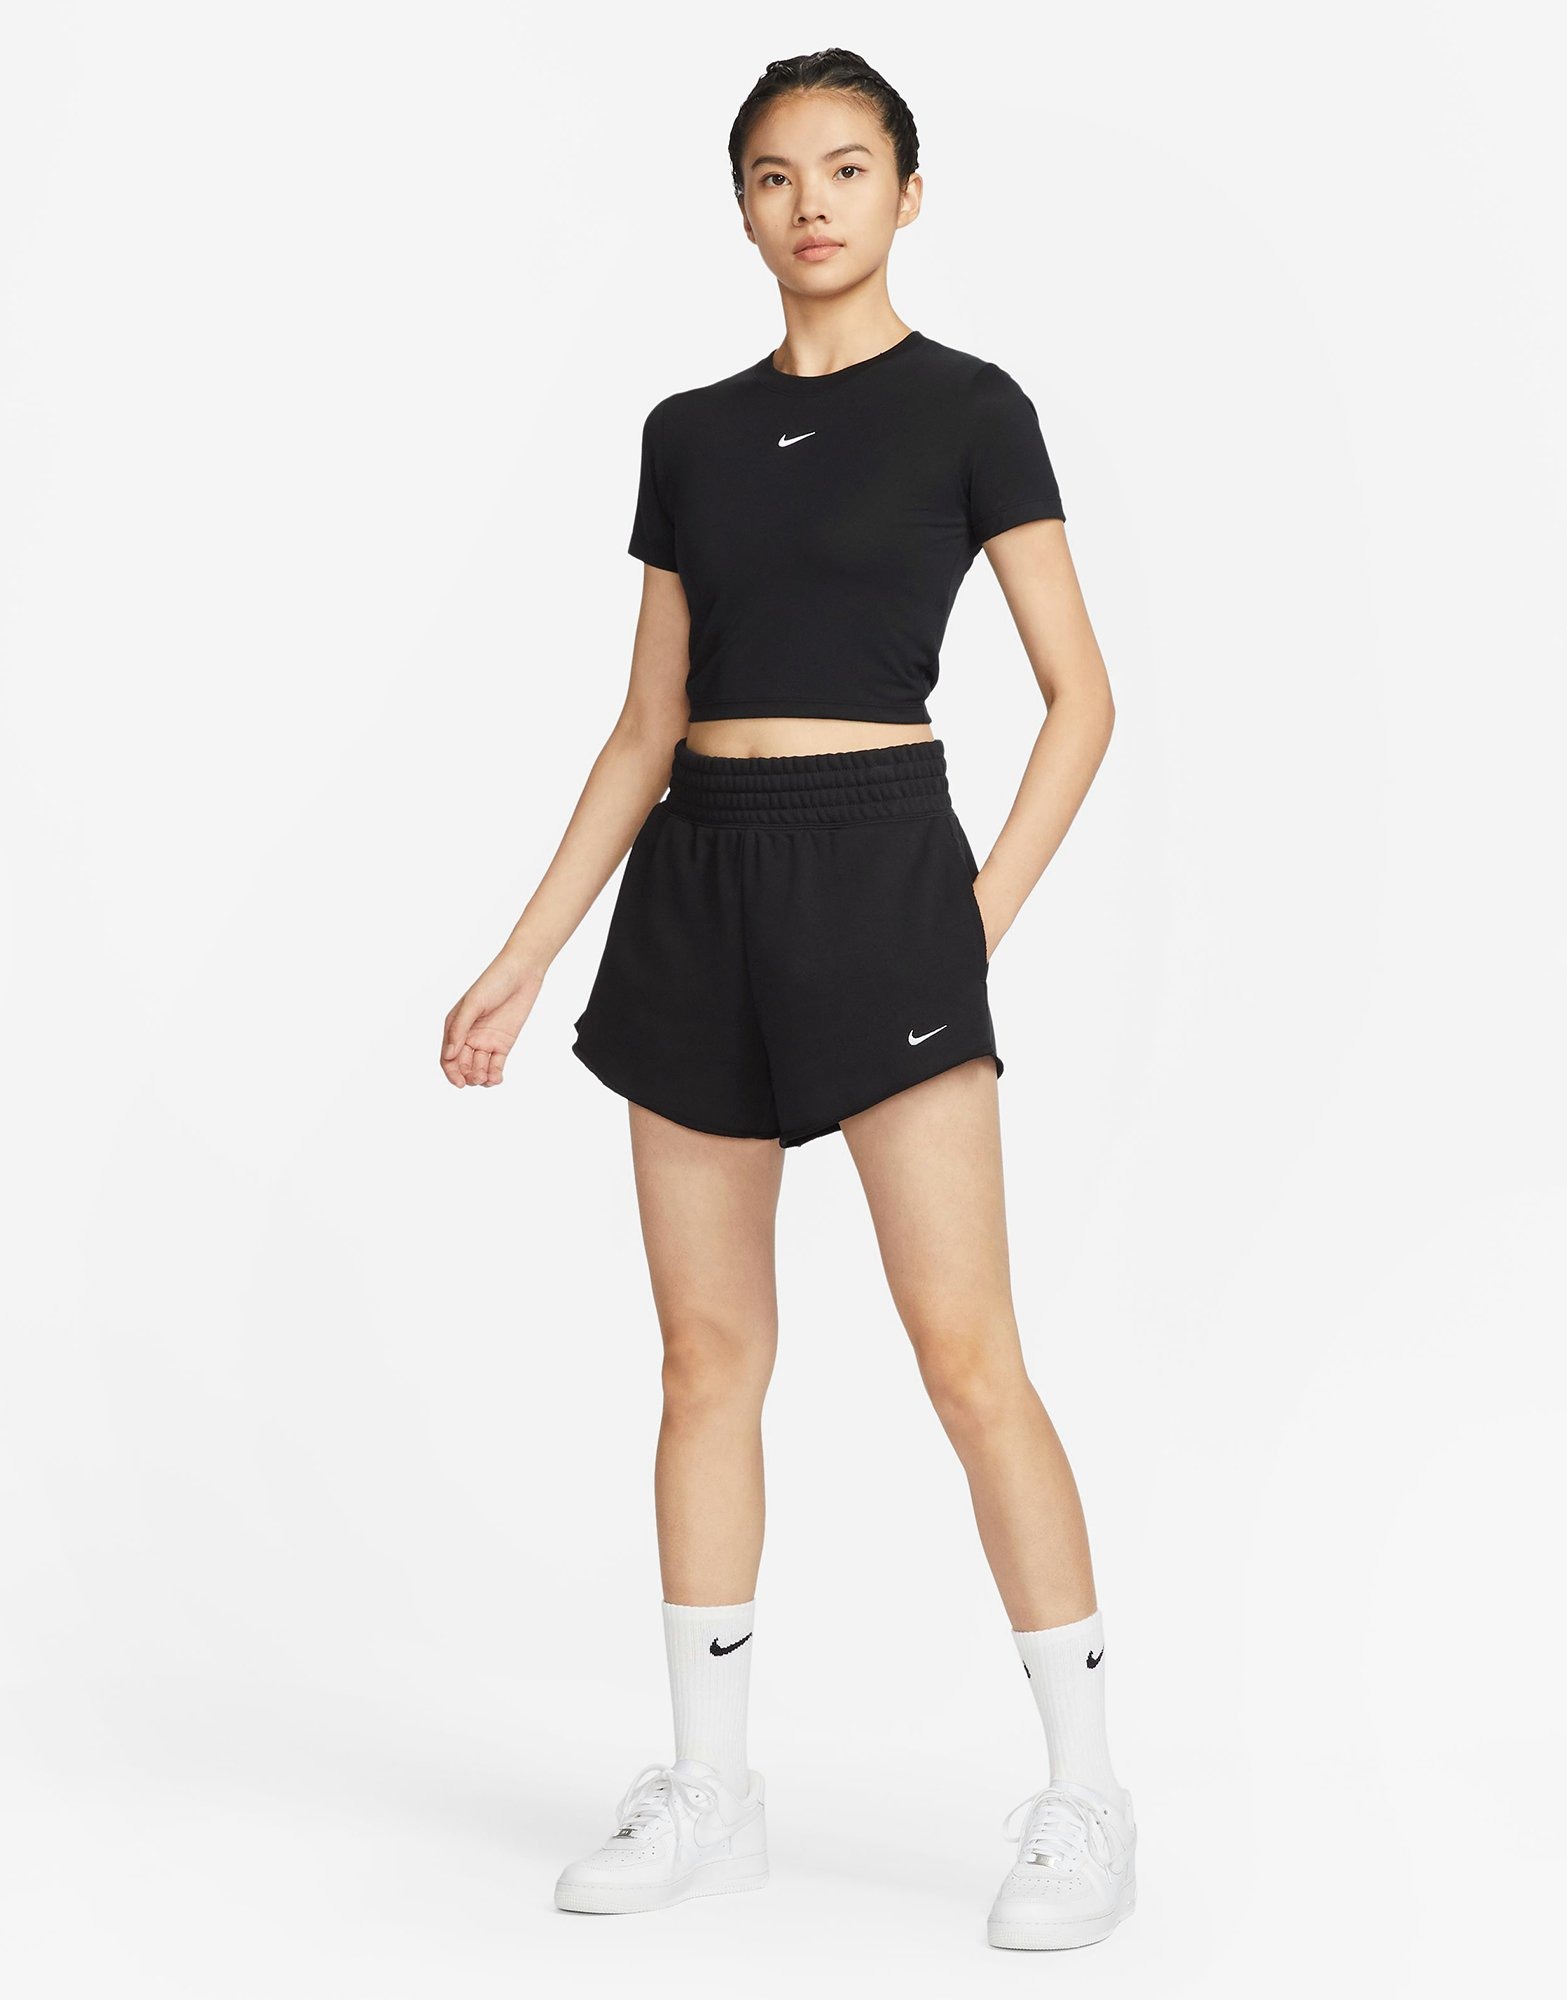 Black Nike Sportswear High-Waisted Shorts Women's - JD Sports Singapore